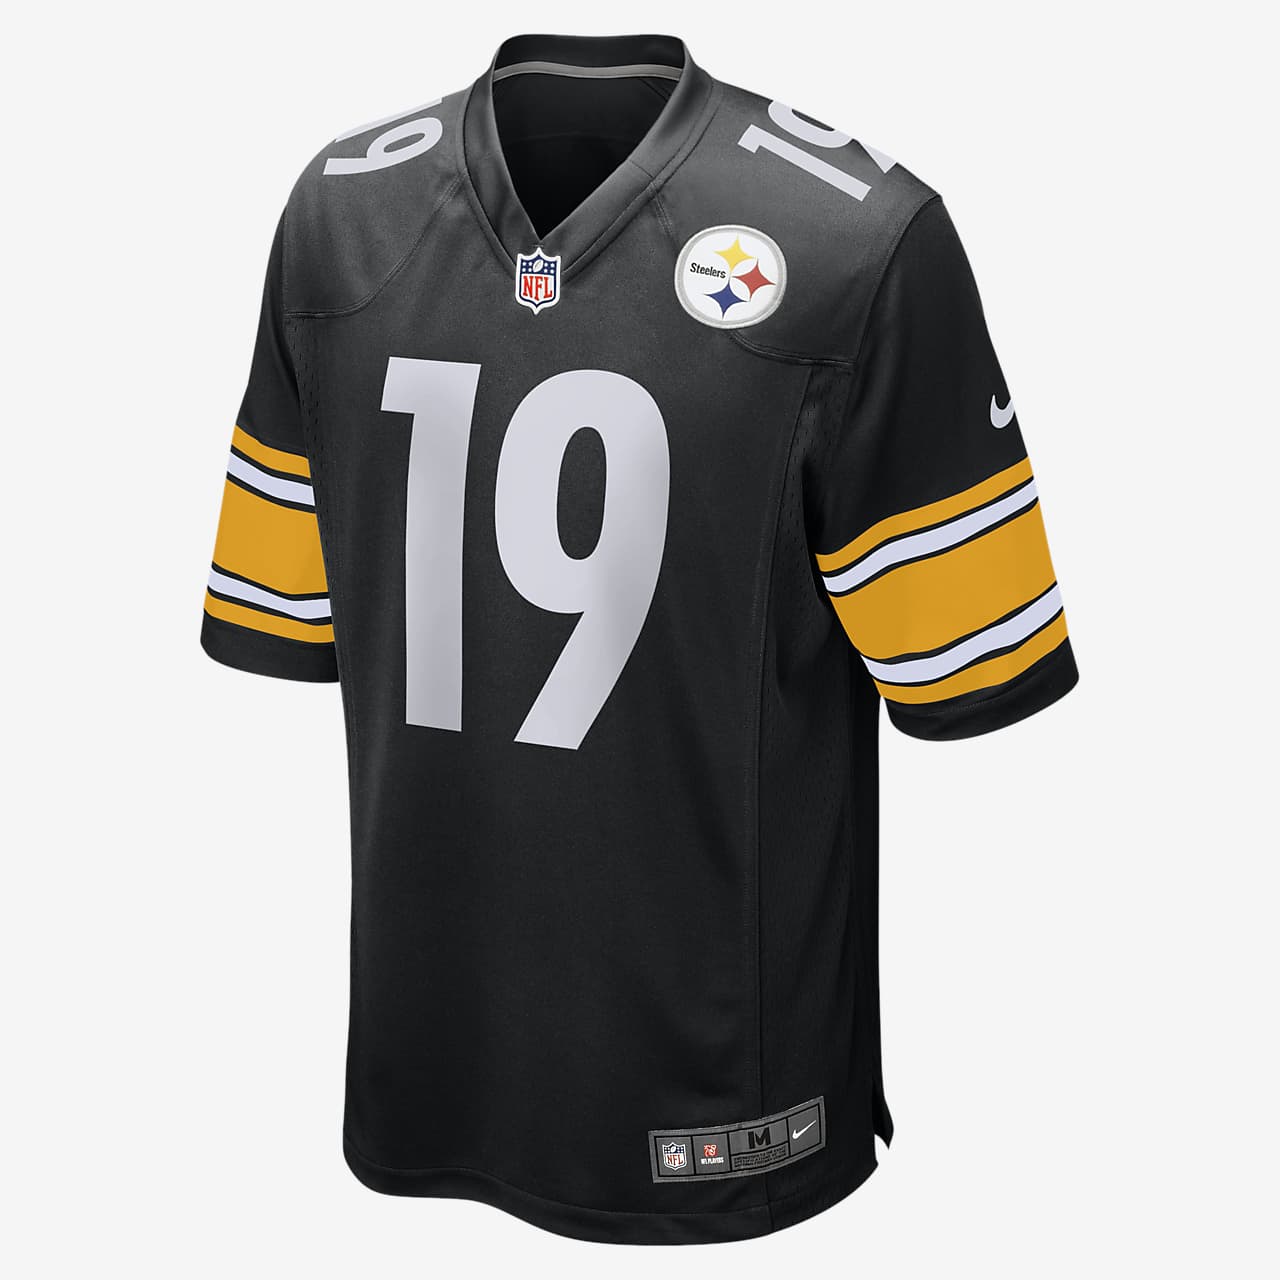 NFL Pittsburgh Steelers (JuJu Smith-Schuster) Men's Game Football Jersey